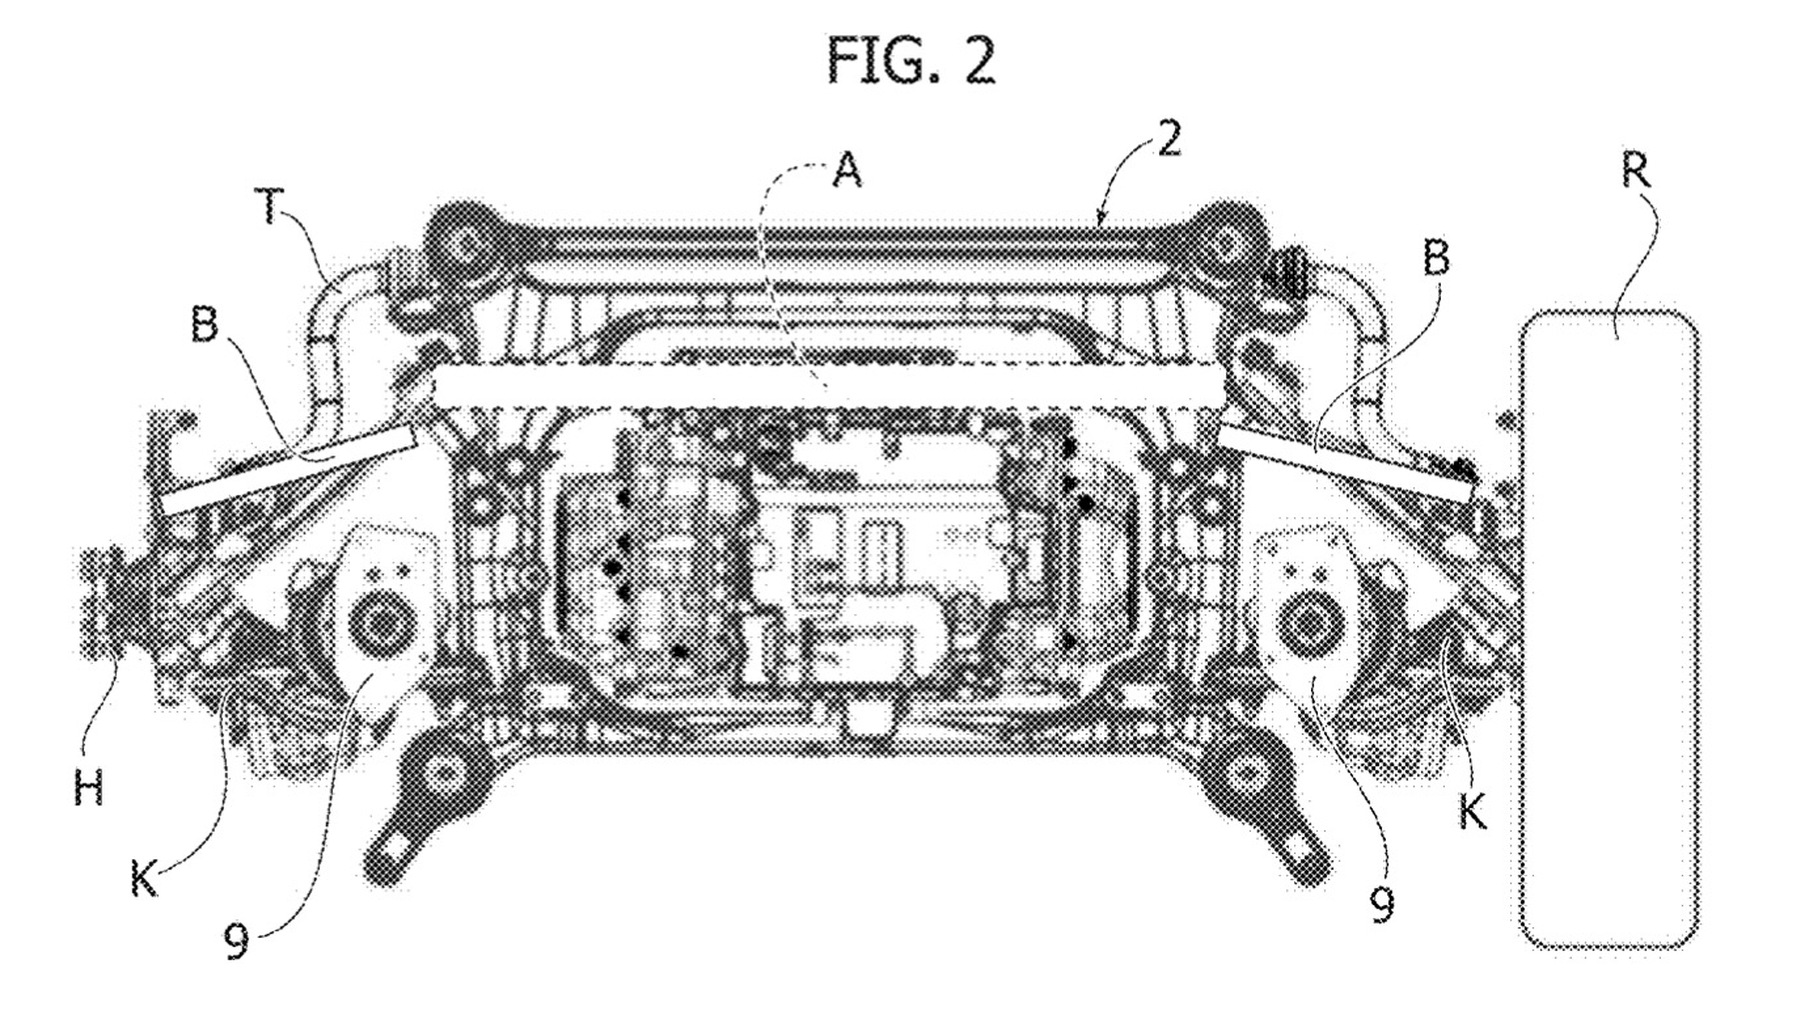 Stellantis rear-wheel steering system patent image